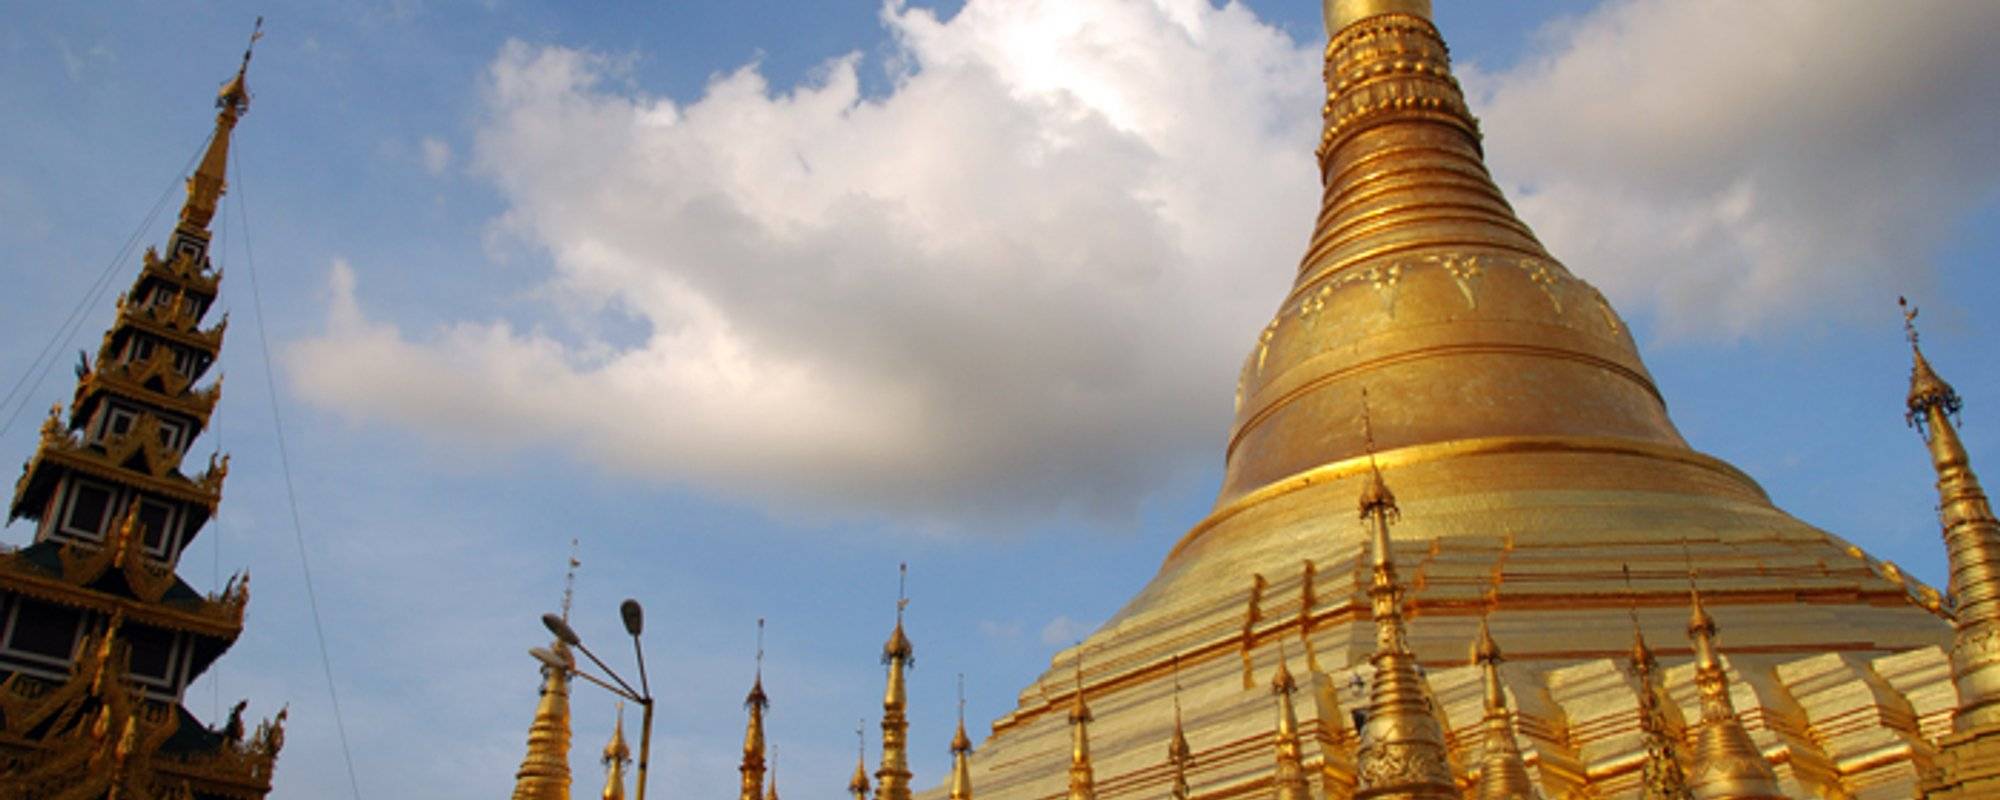 Myanmar -  Golden moments in Yangon